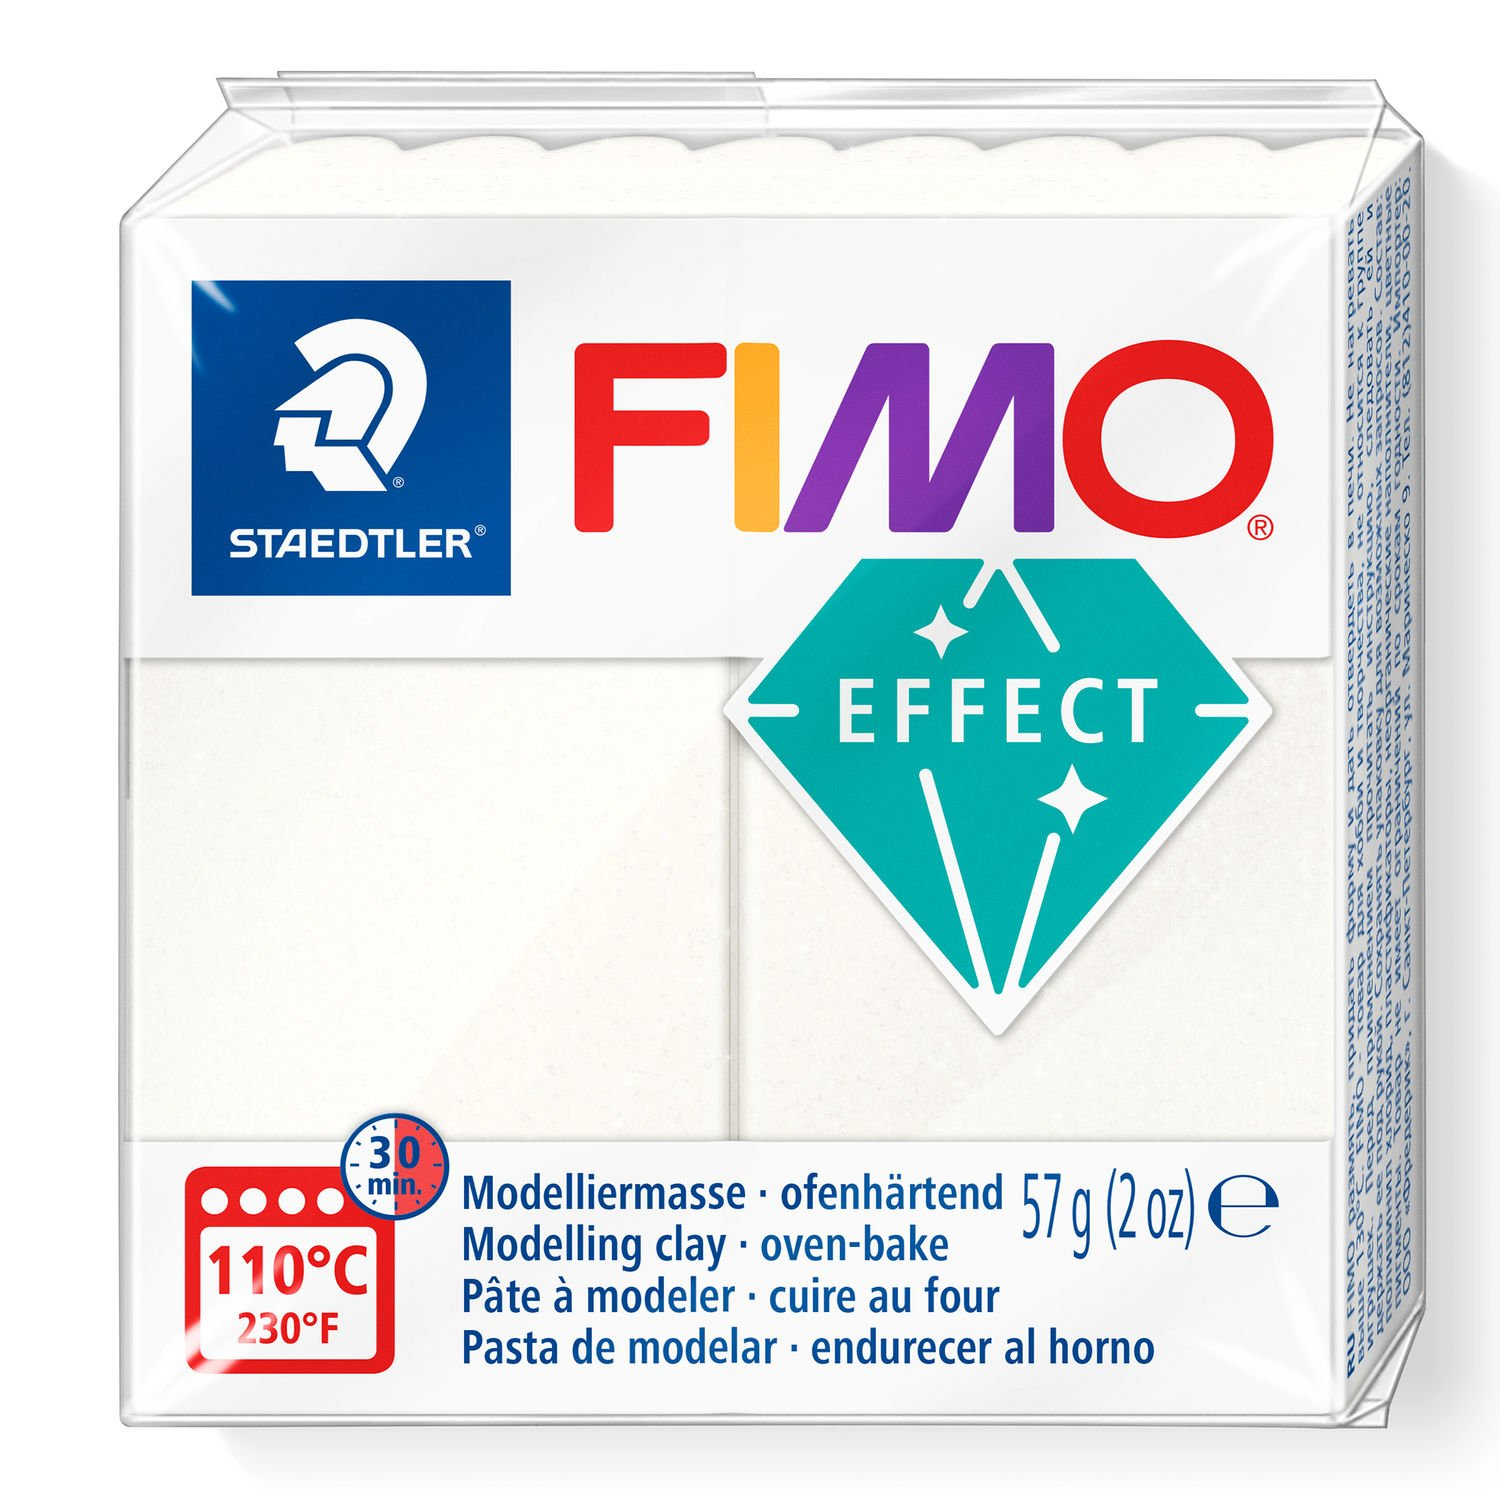 Vorschau: STAEDTLER FIMO 8020 - Knetmasse - Perleffekt - Erwachsene - 1 Stück(e) - Metallic mother-of-pearl - 1 Farben